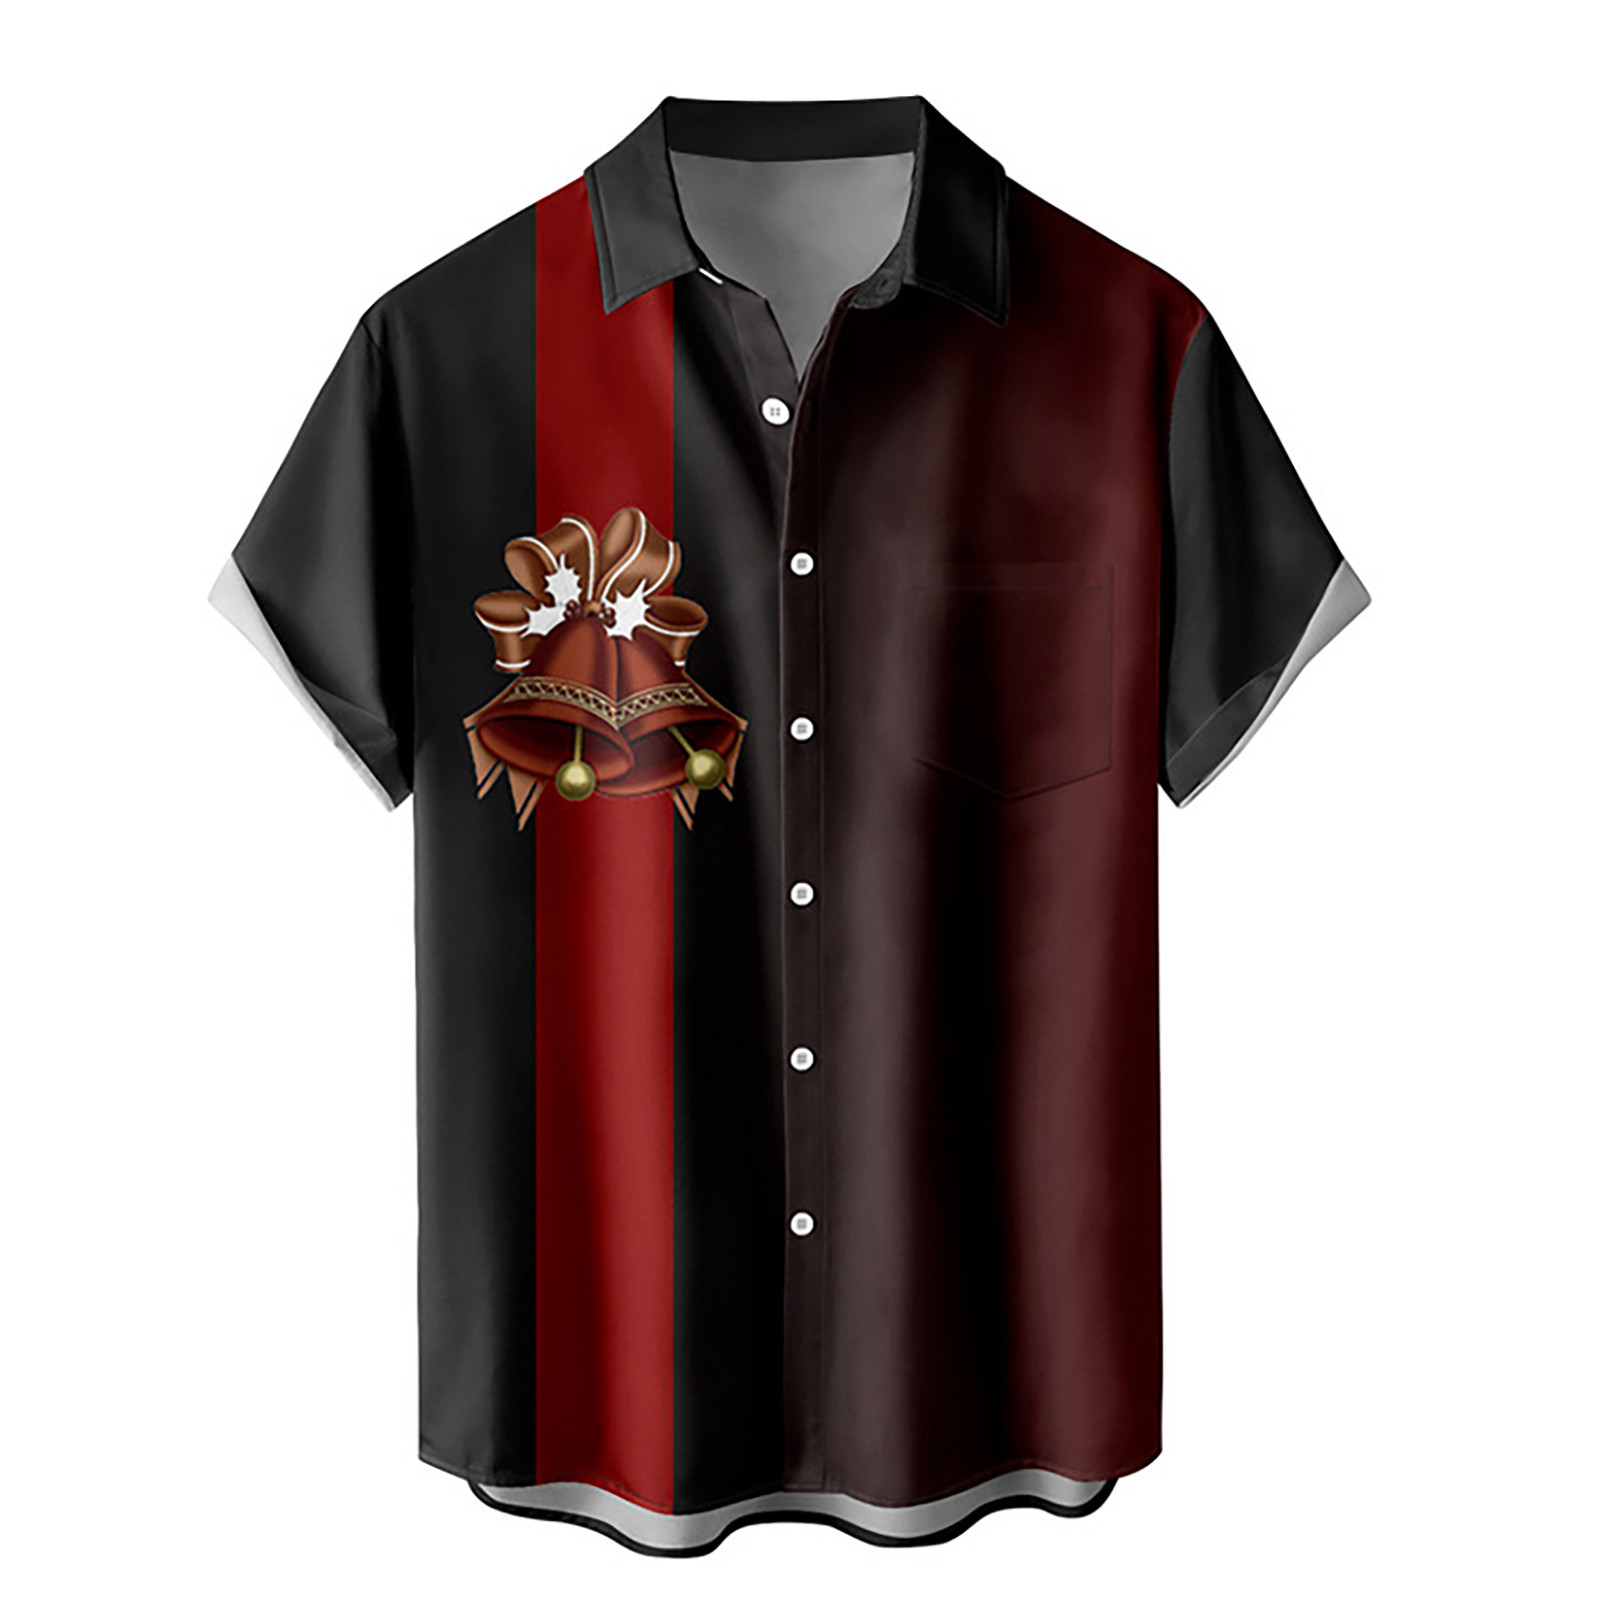 AdBFJAF Long Sleeve Shirts for Men Cotton Mens Christmas Santa Gift 3D ...